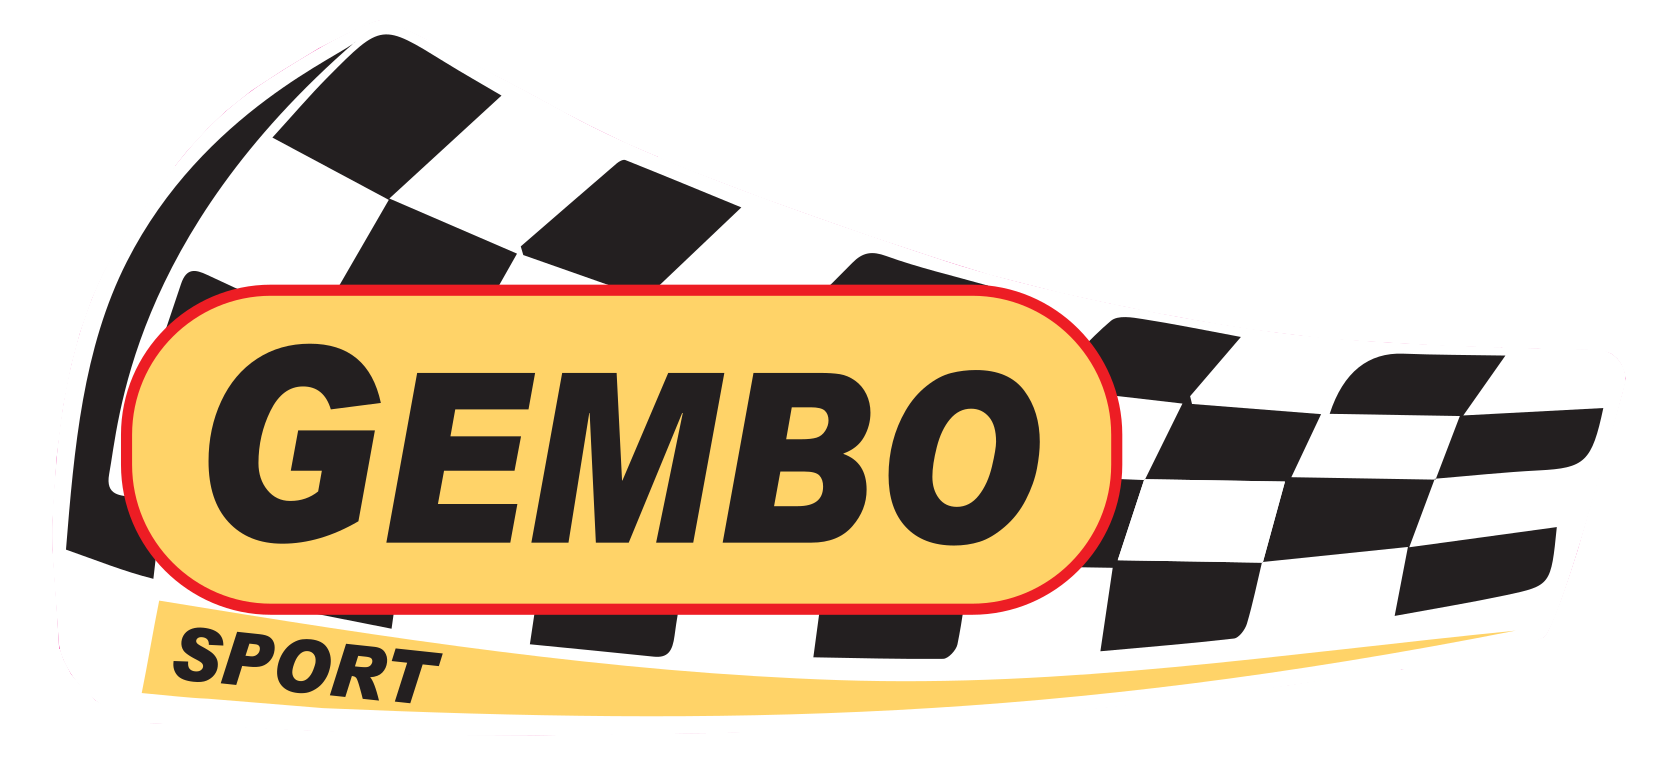 Gembo Sport